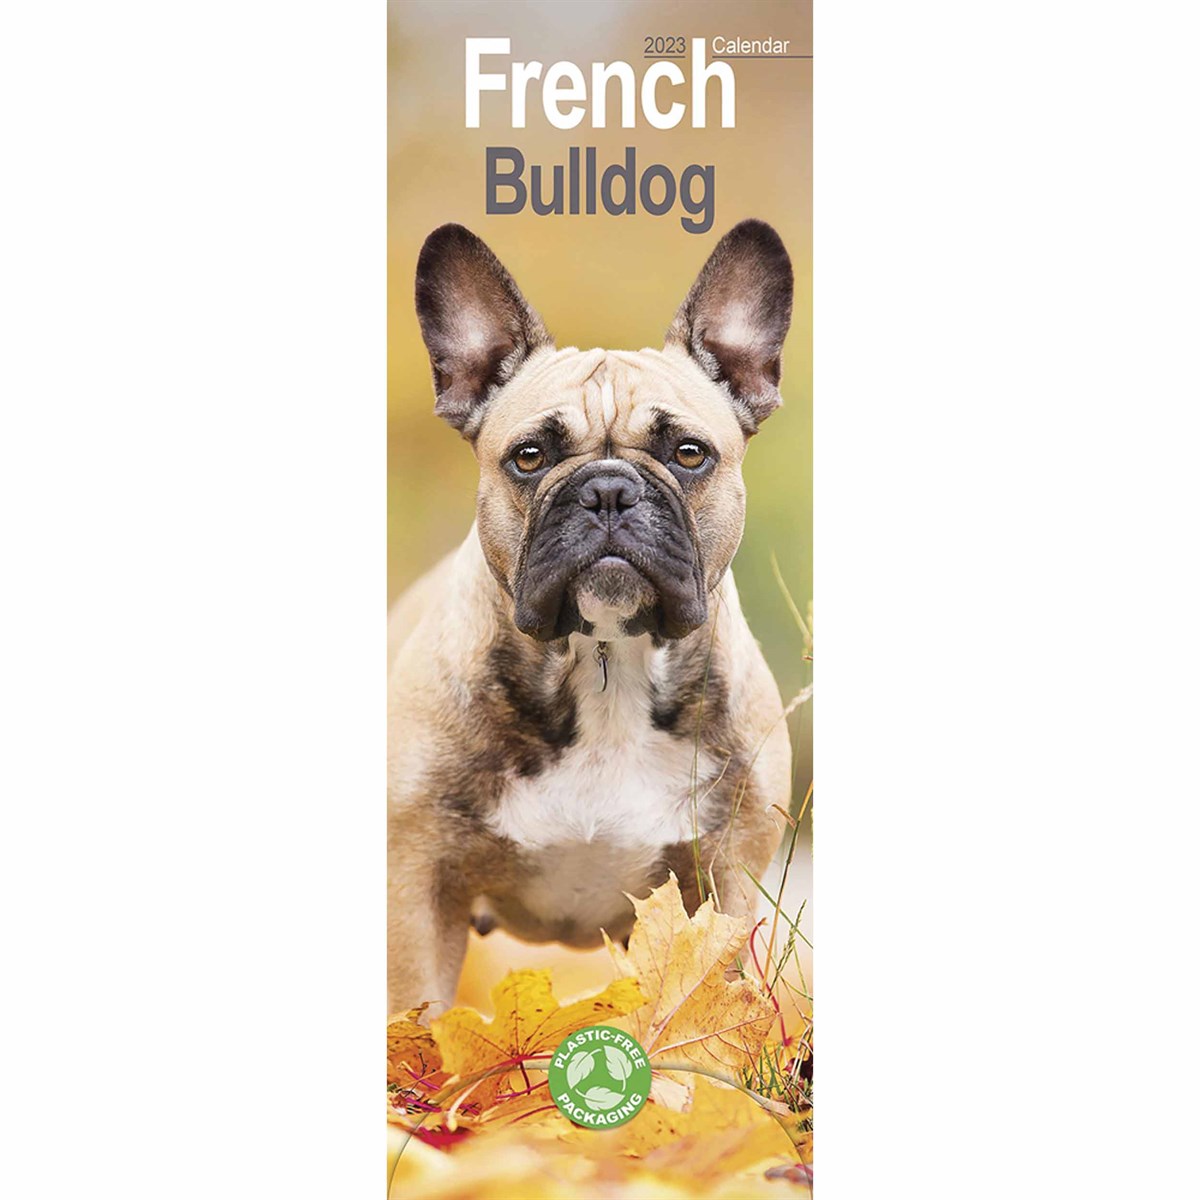 French Bulldog Slim 2023 Calendars